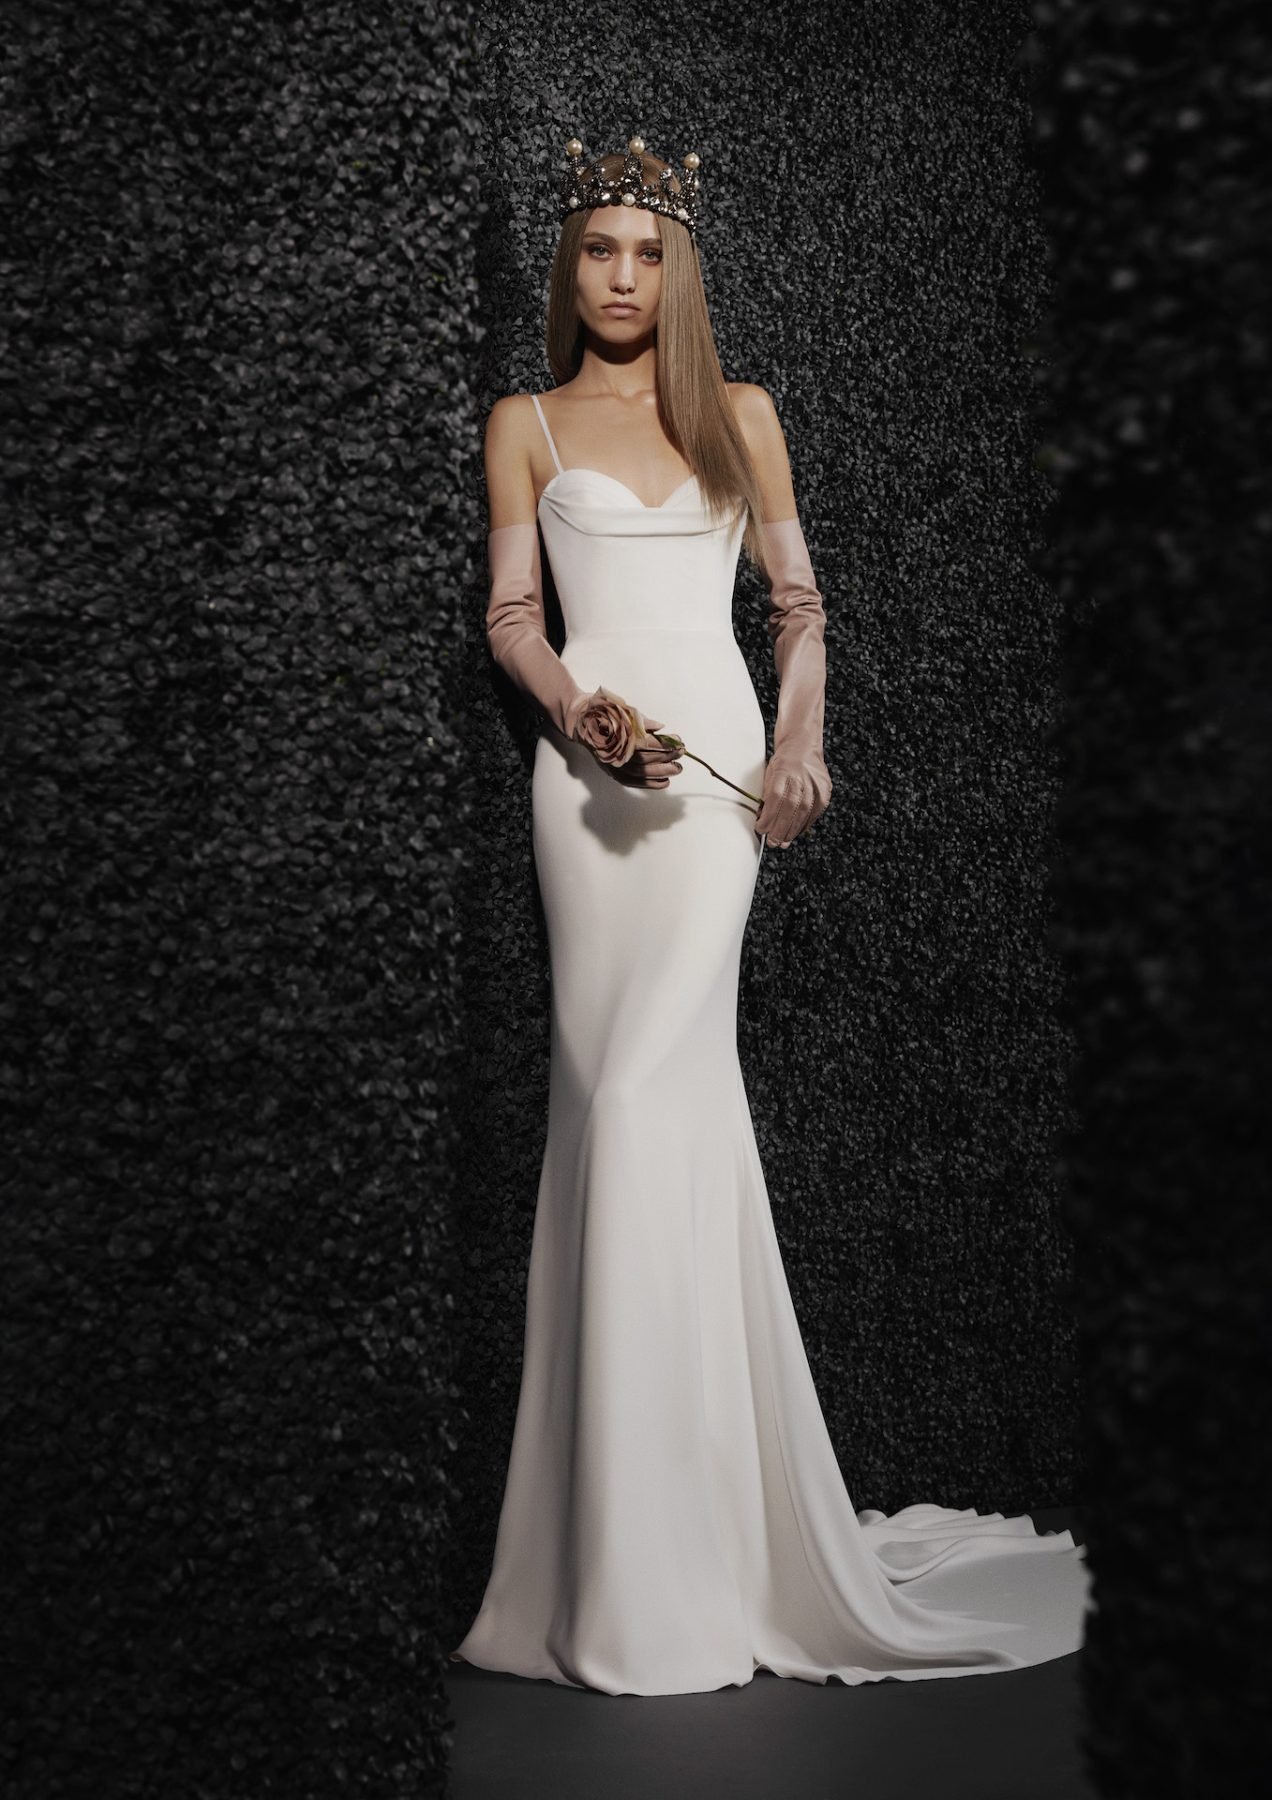 vera-wang-bride-spaghetti-strap-simple-sweetheart-neckline-sheath-wedding-dress-with-draping-at-neckline-34421529-1272x1800.jpeg